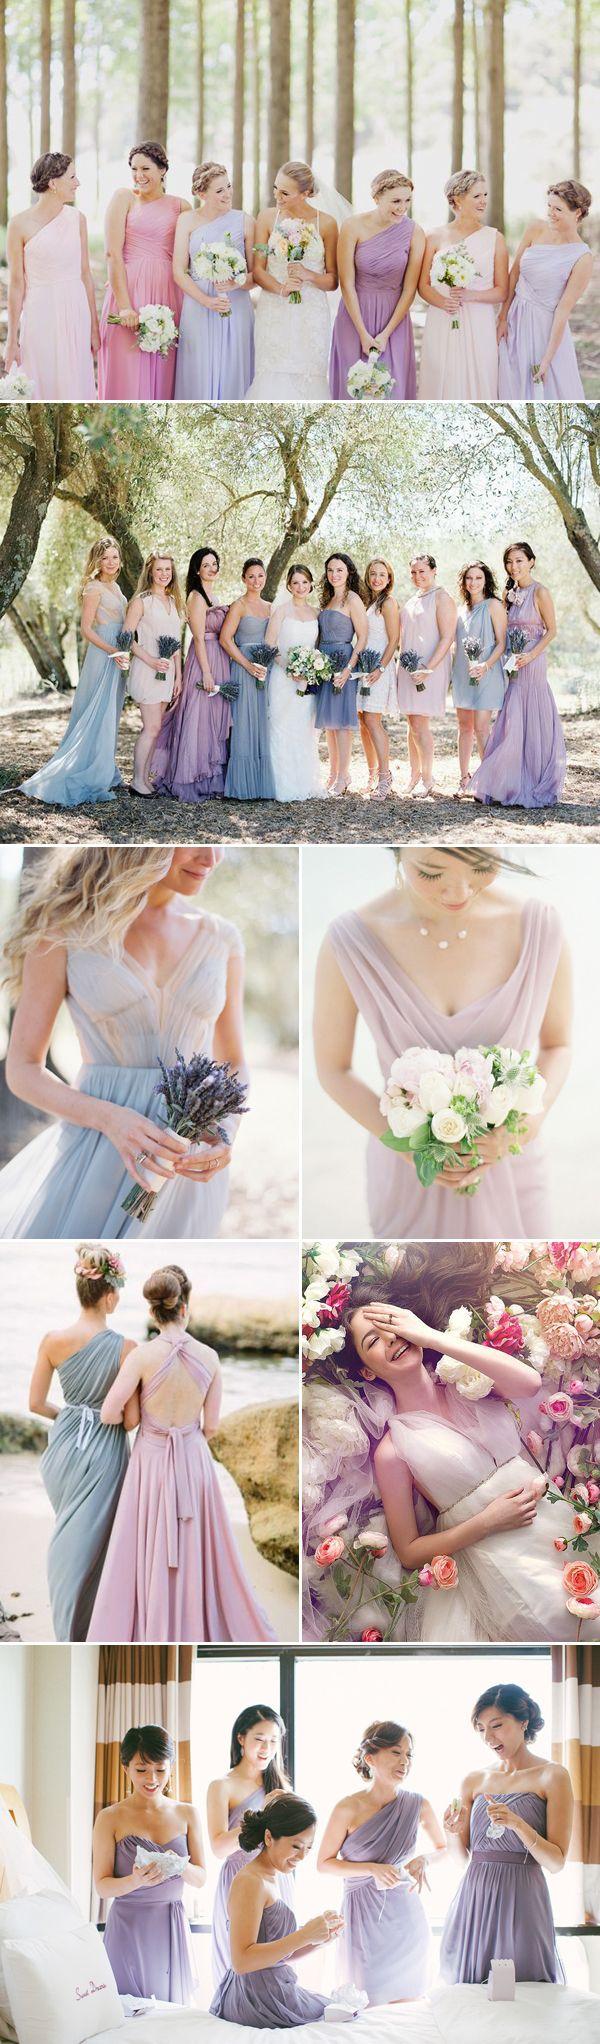 Wedding - Top 8 Bridesmaid Dress Trends For Summer 2014